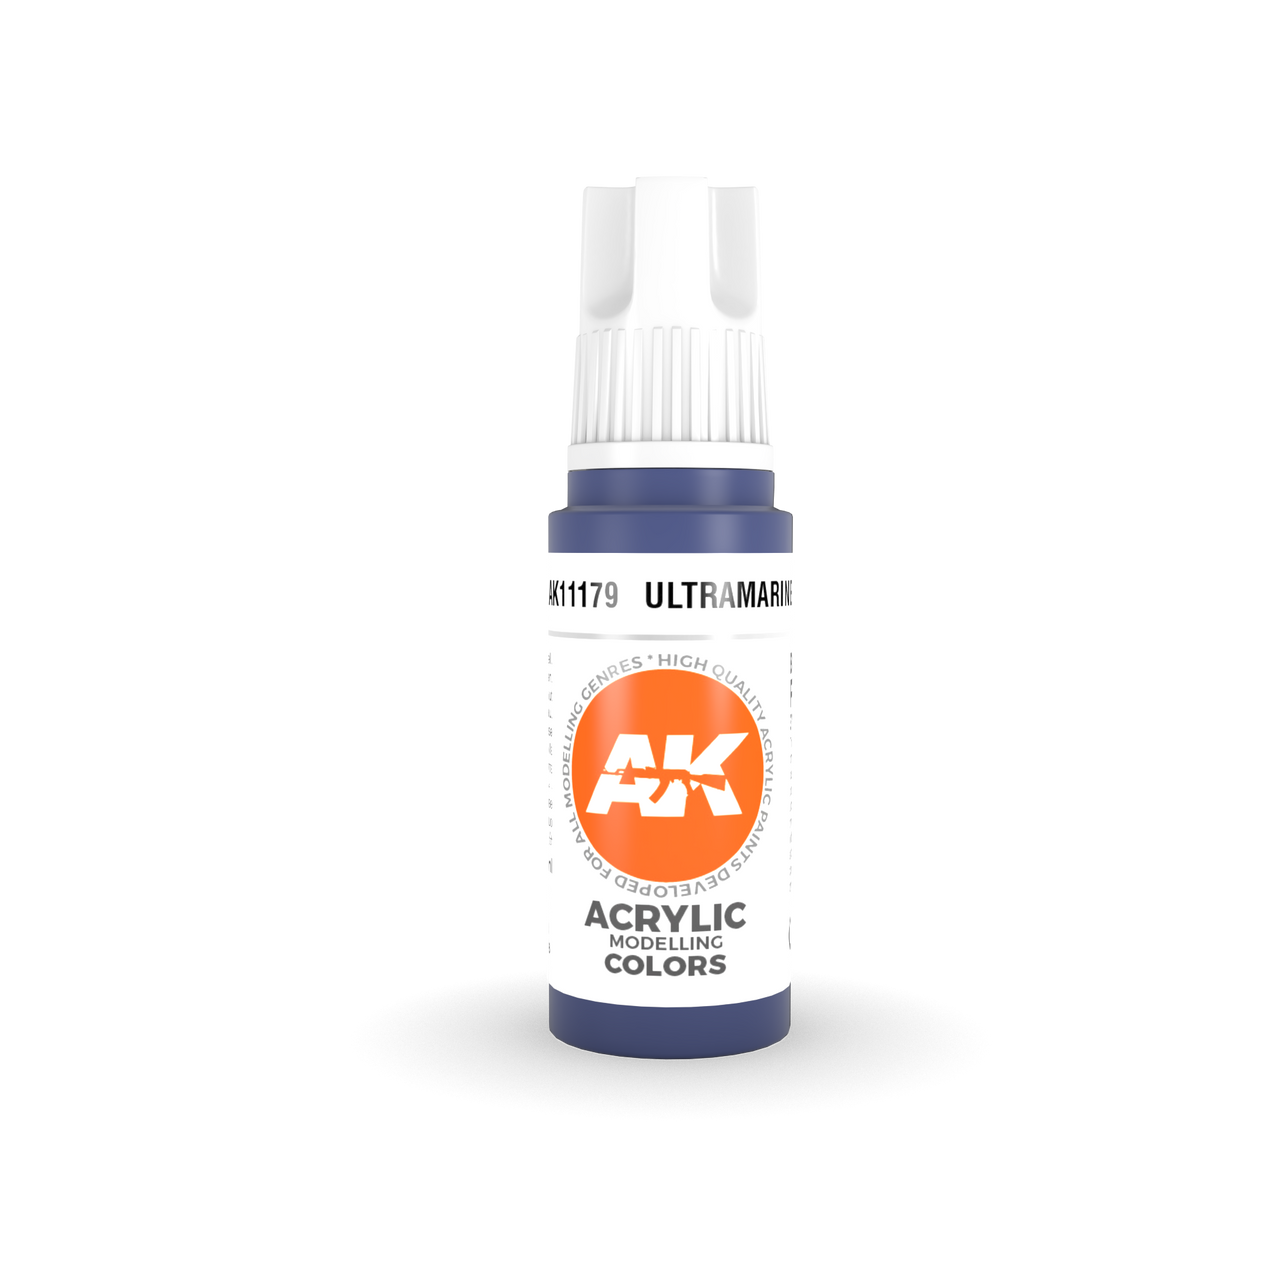 Ultramarine - AK 3Gen Acrylic